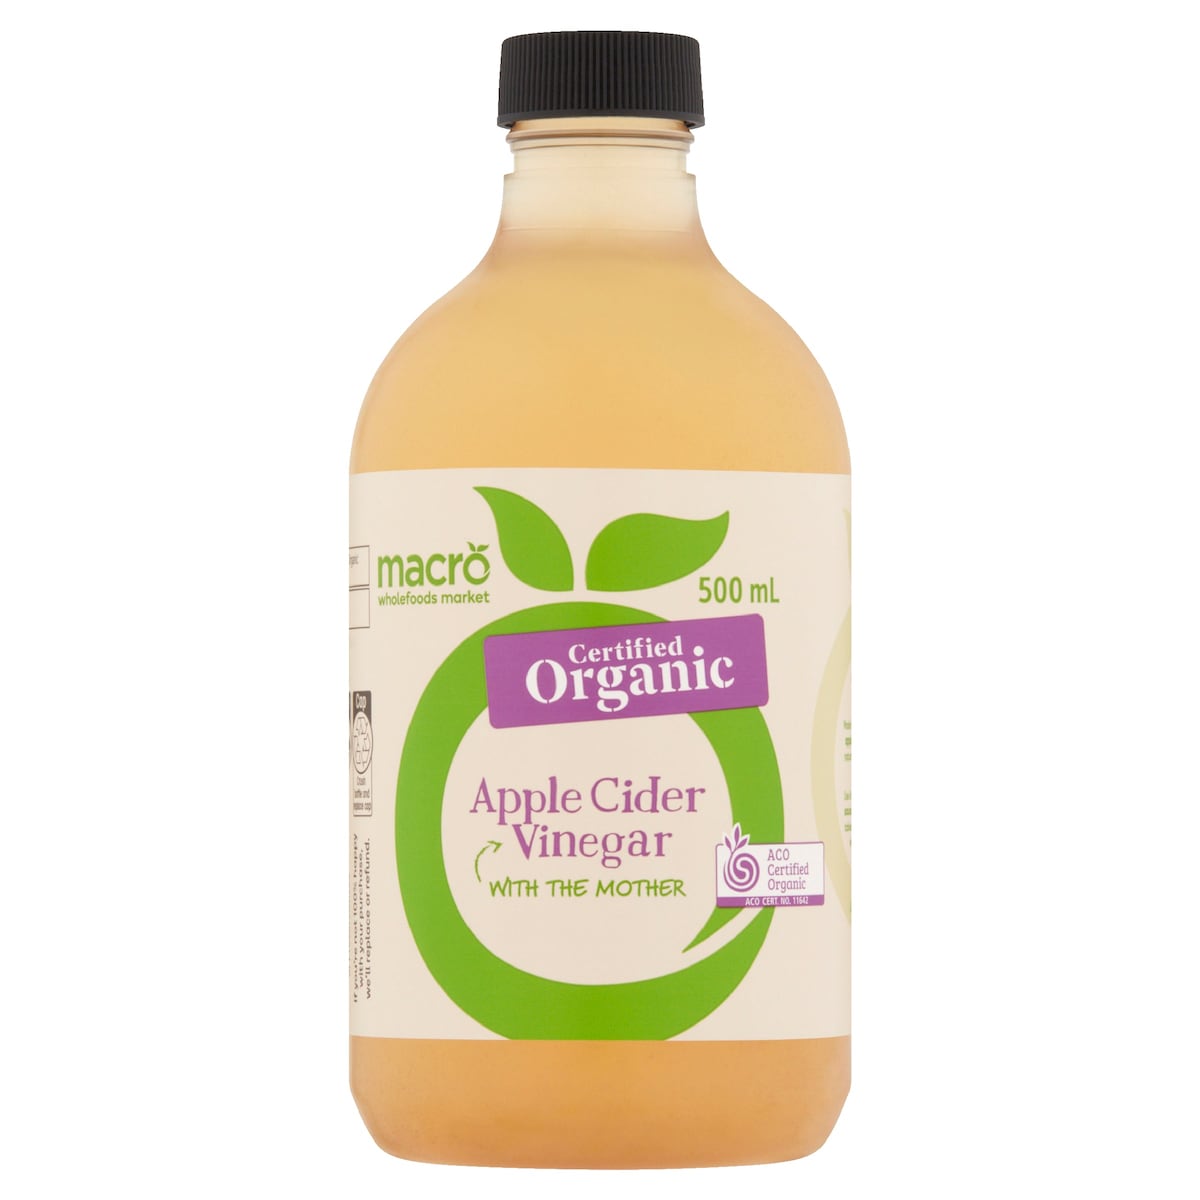 Macro Organic Apple Cider Vinegar 500ml